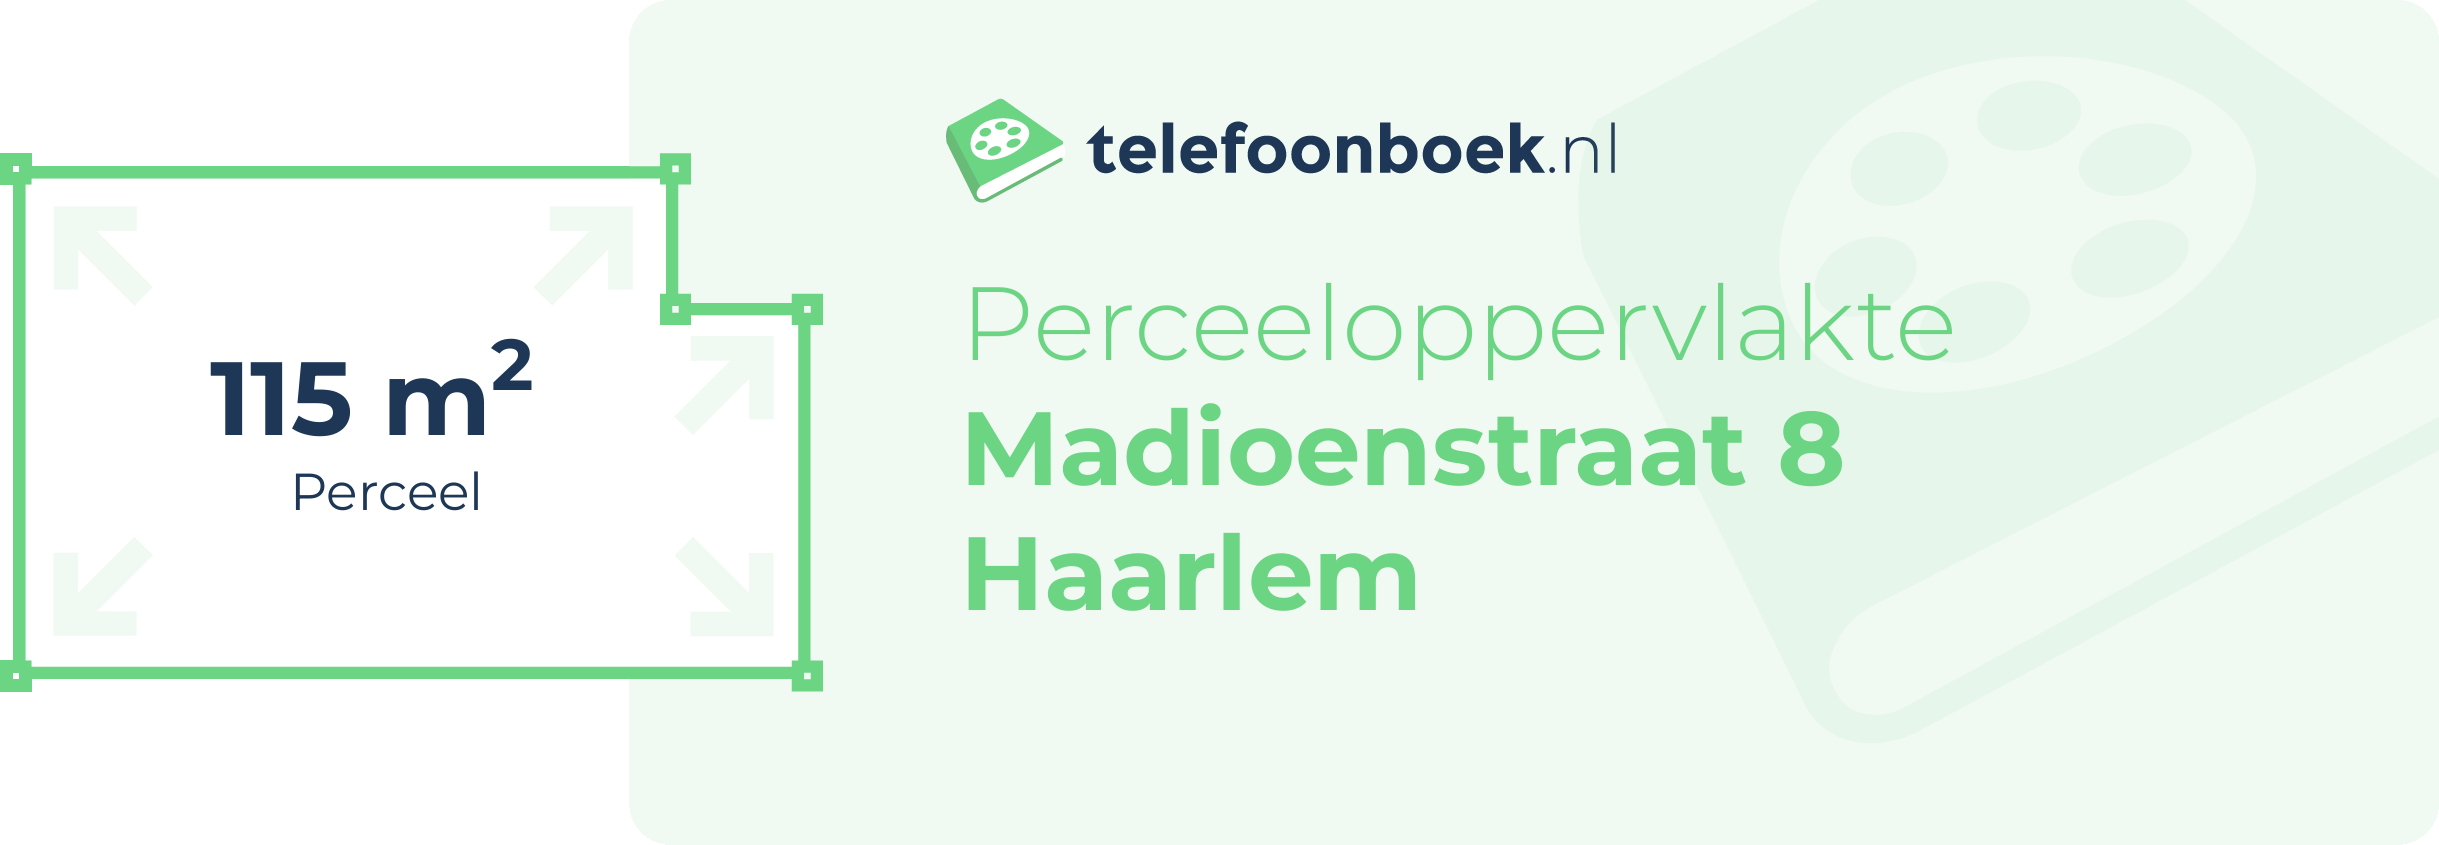 Perceeloppervlakte Madioenstraat 8 Haarlem